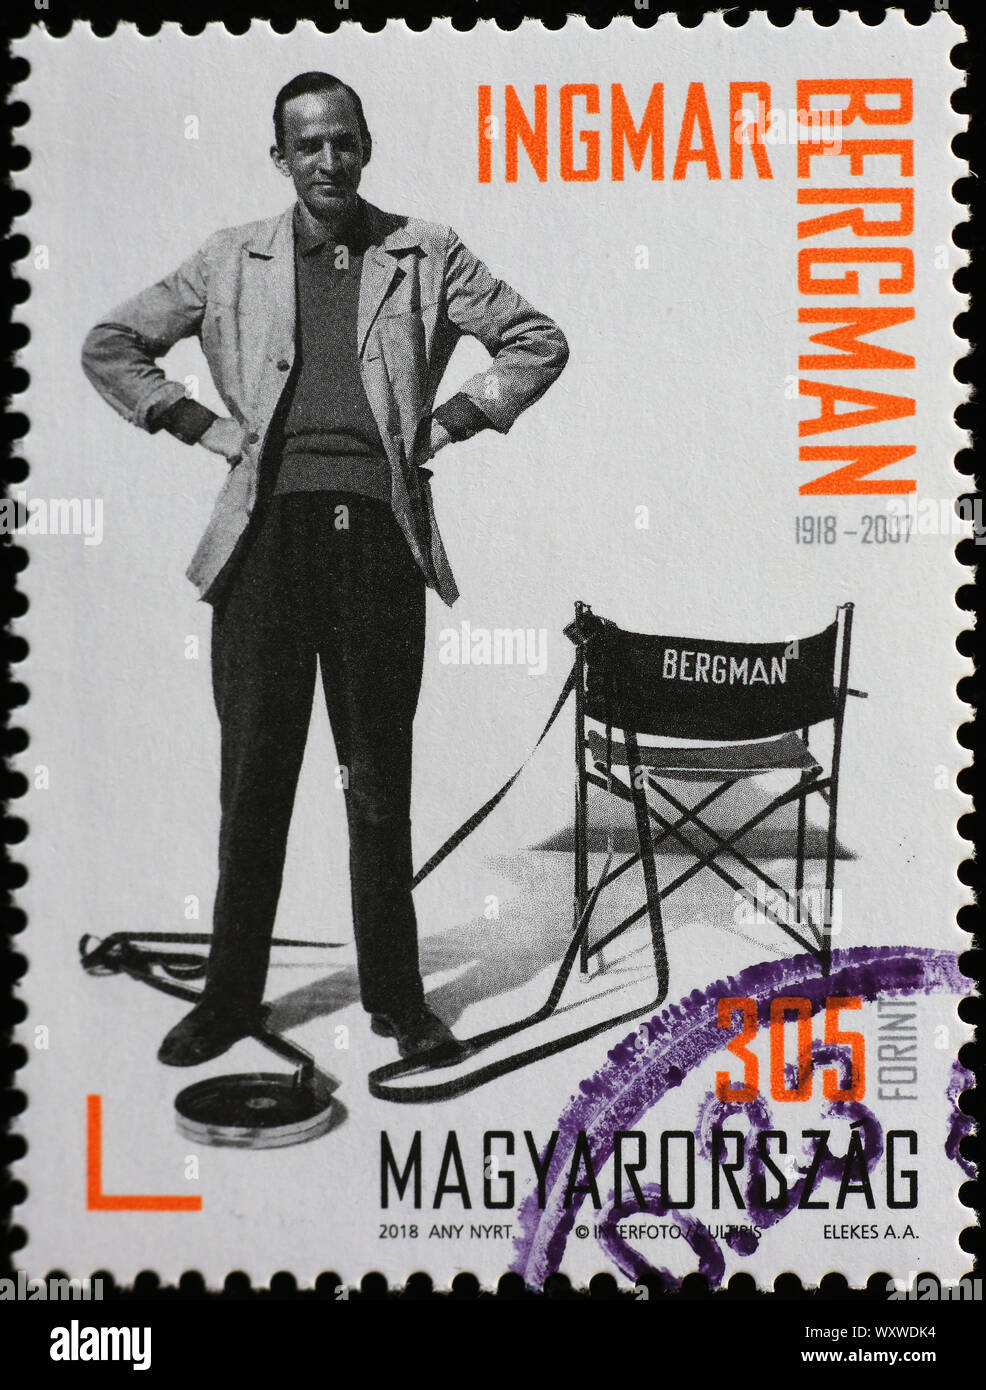 Regisseur Ingmar Bergman auf Briefmarke Stockfoto